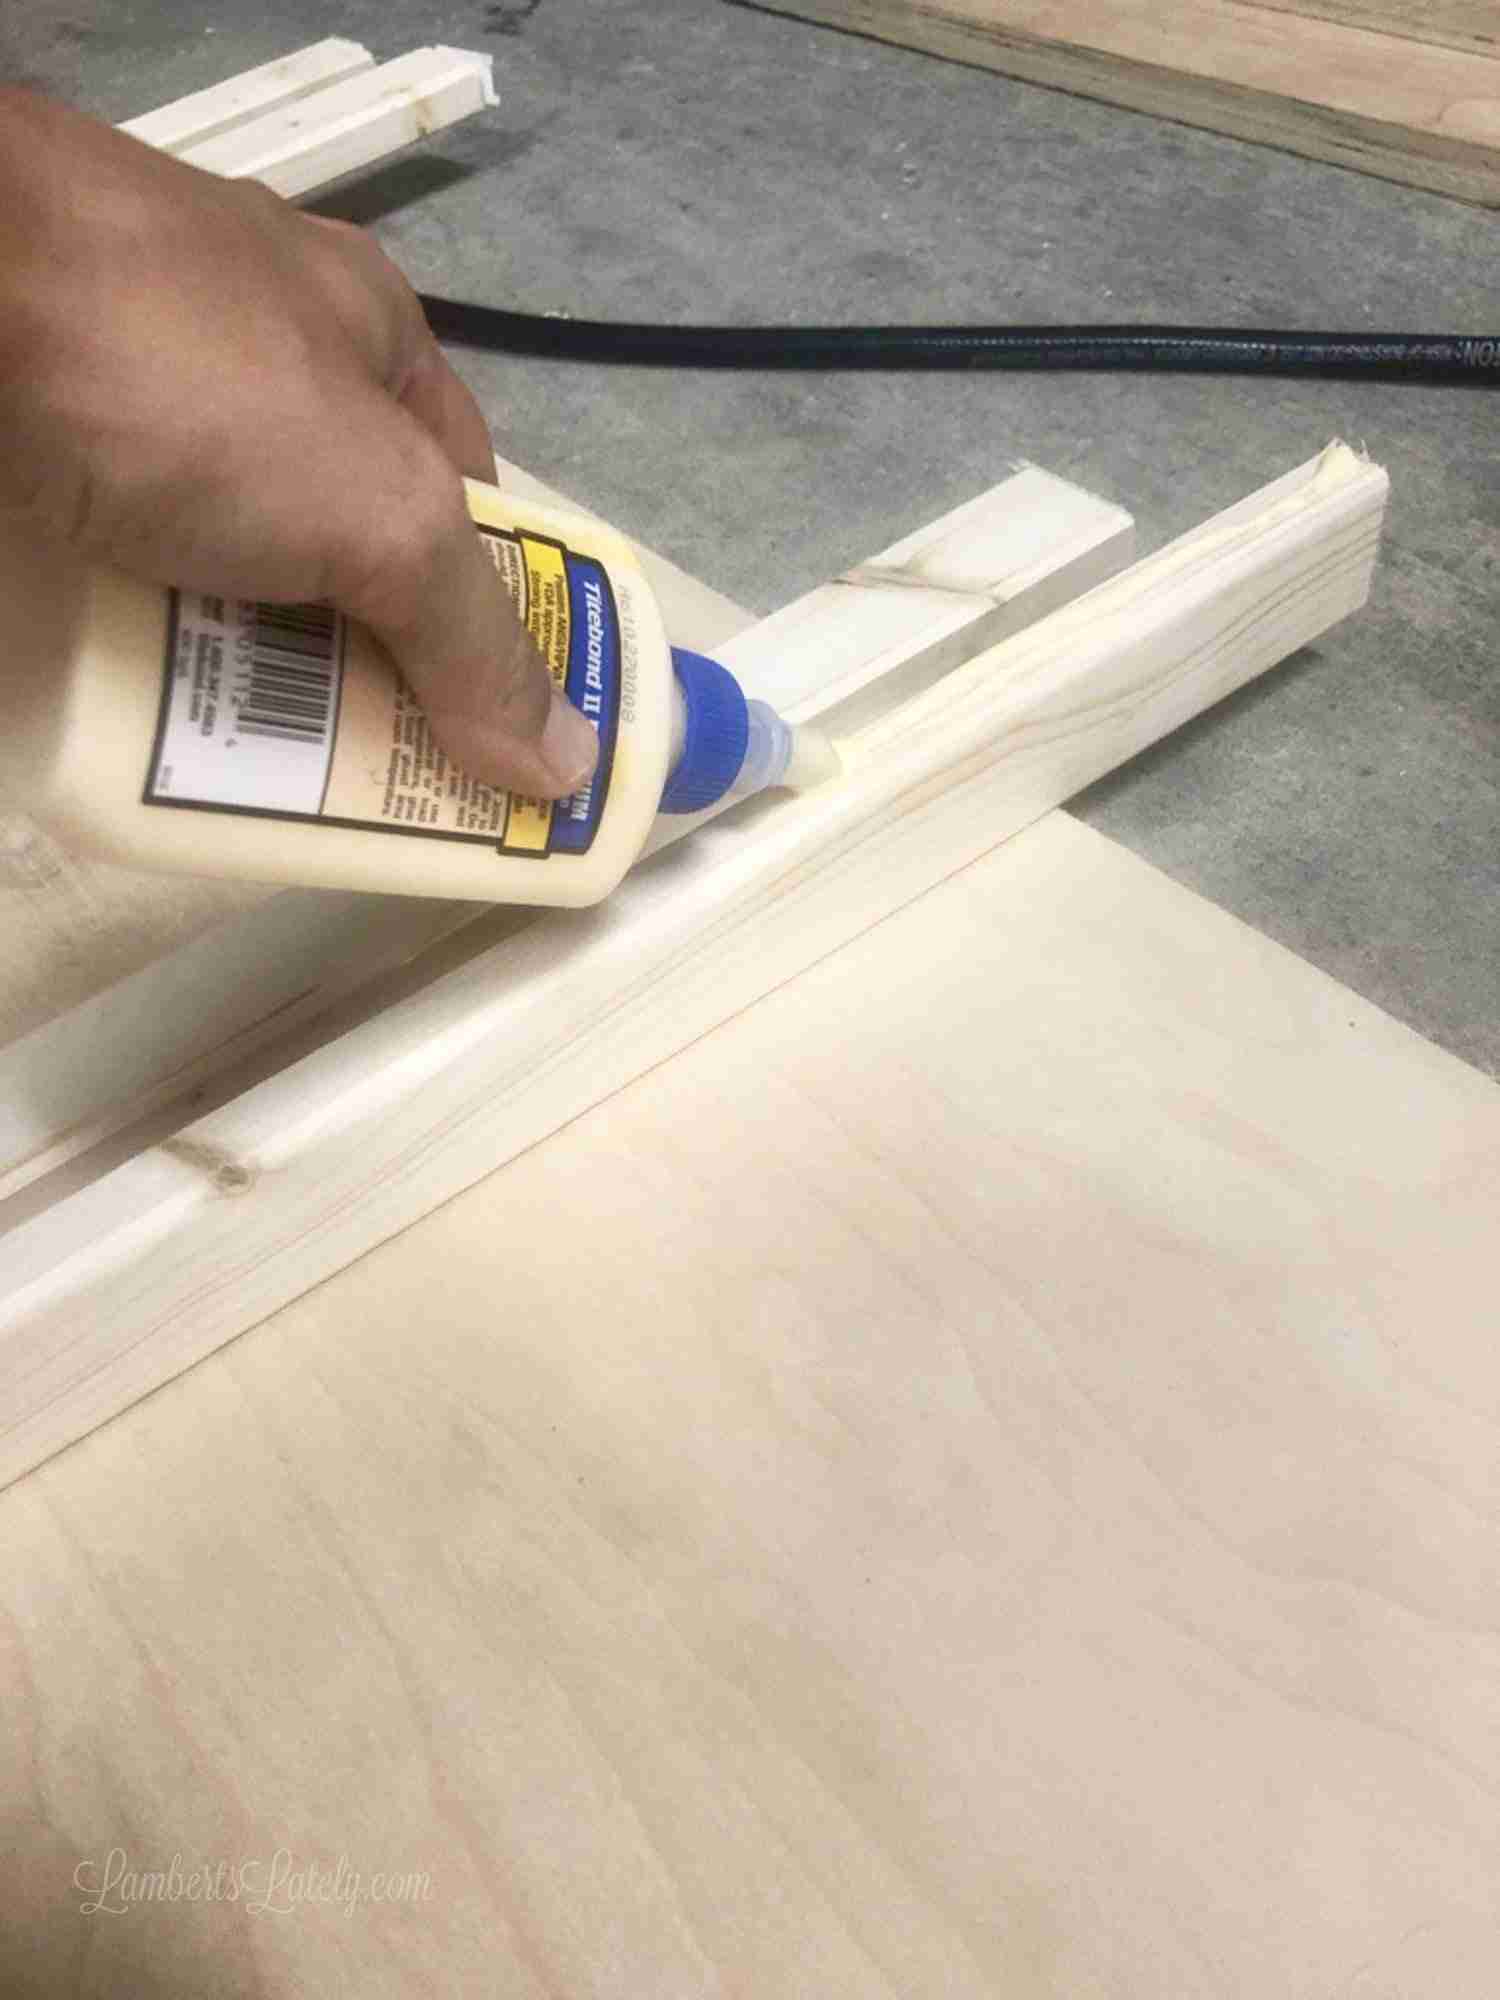 adding wood glue to a 1x2" piece of wood.